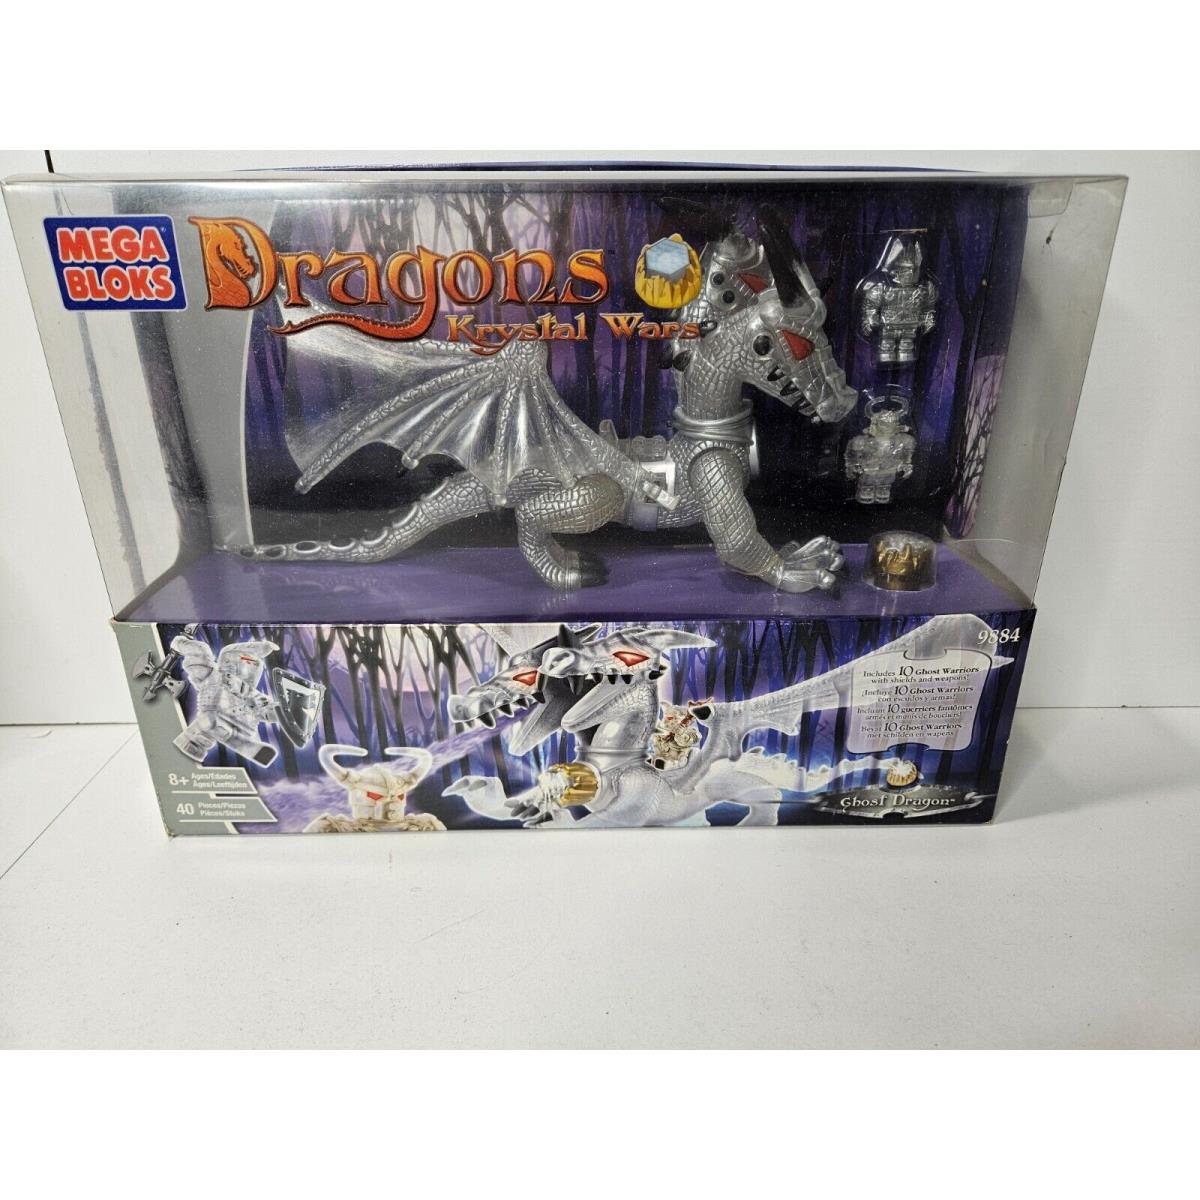 2003 Mega Bloks Dragons Krystal Wars Ghost Dragon 9884 Ghost Warriors